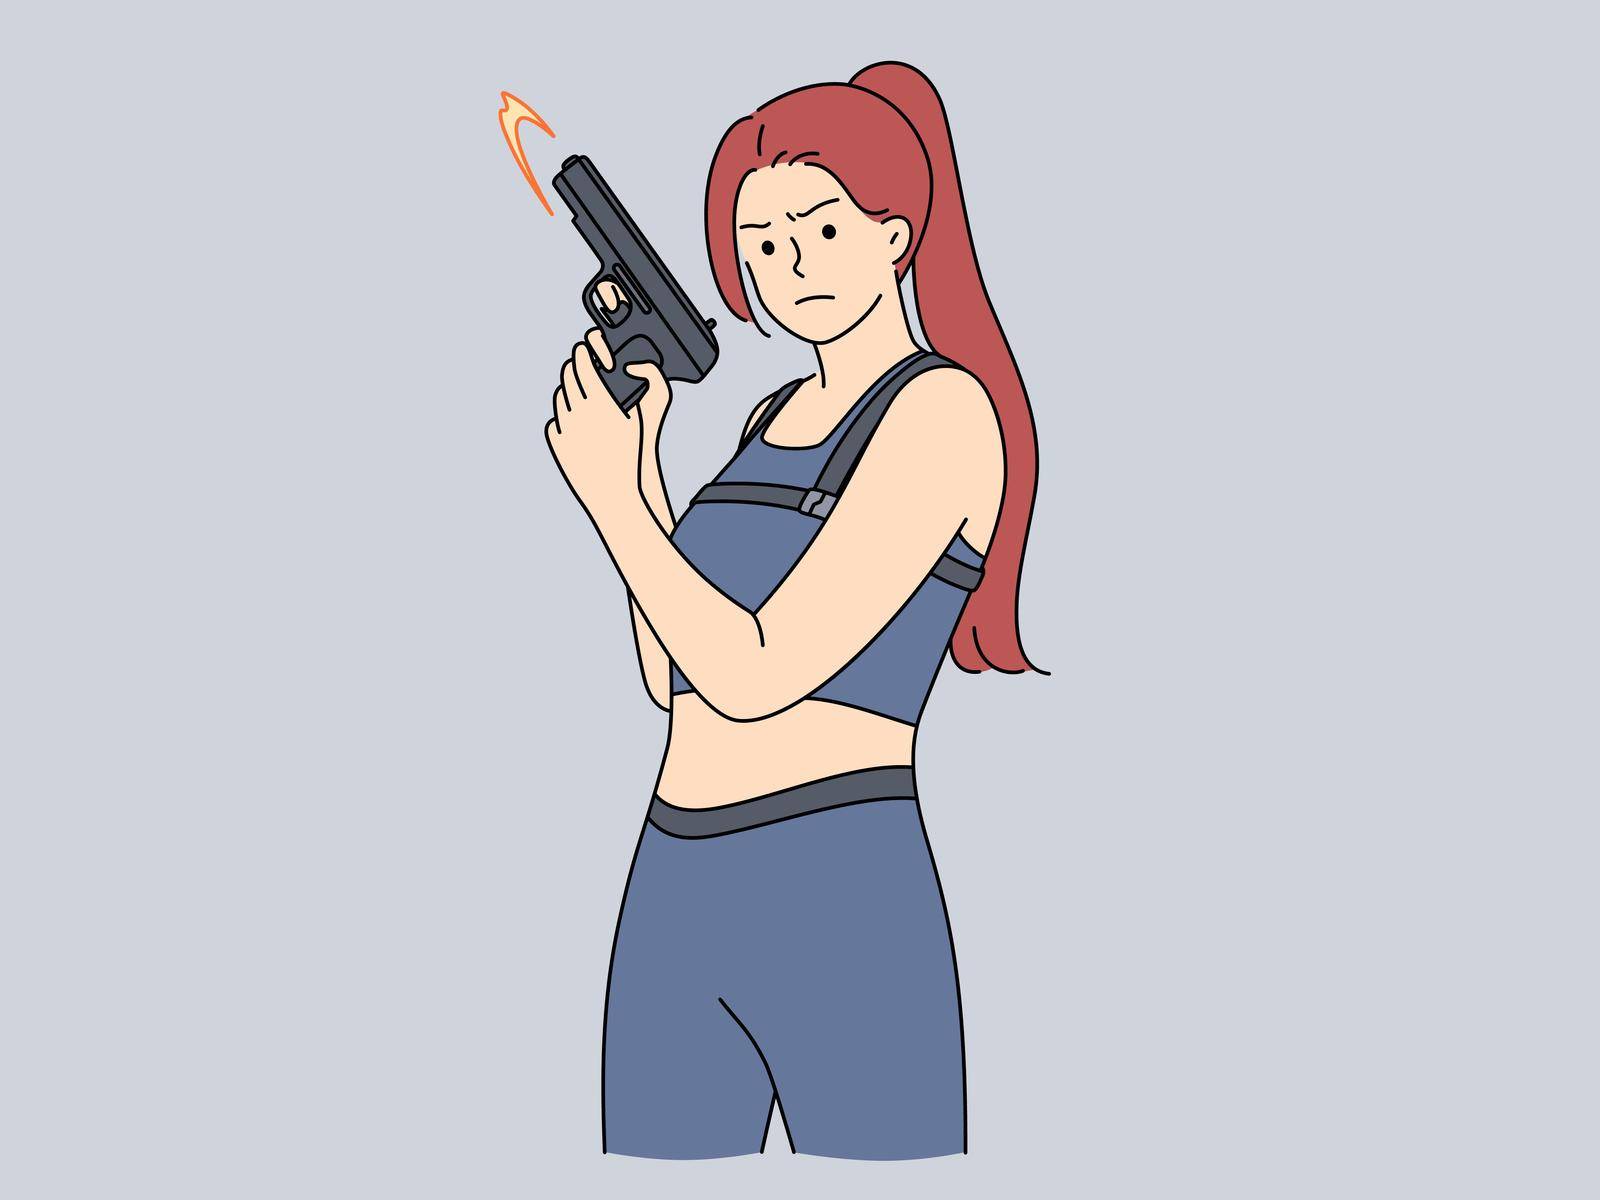 Woman in uniform holding gun by Vasilyeu